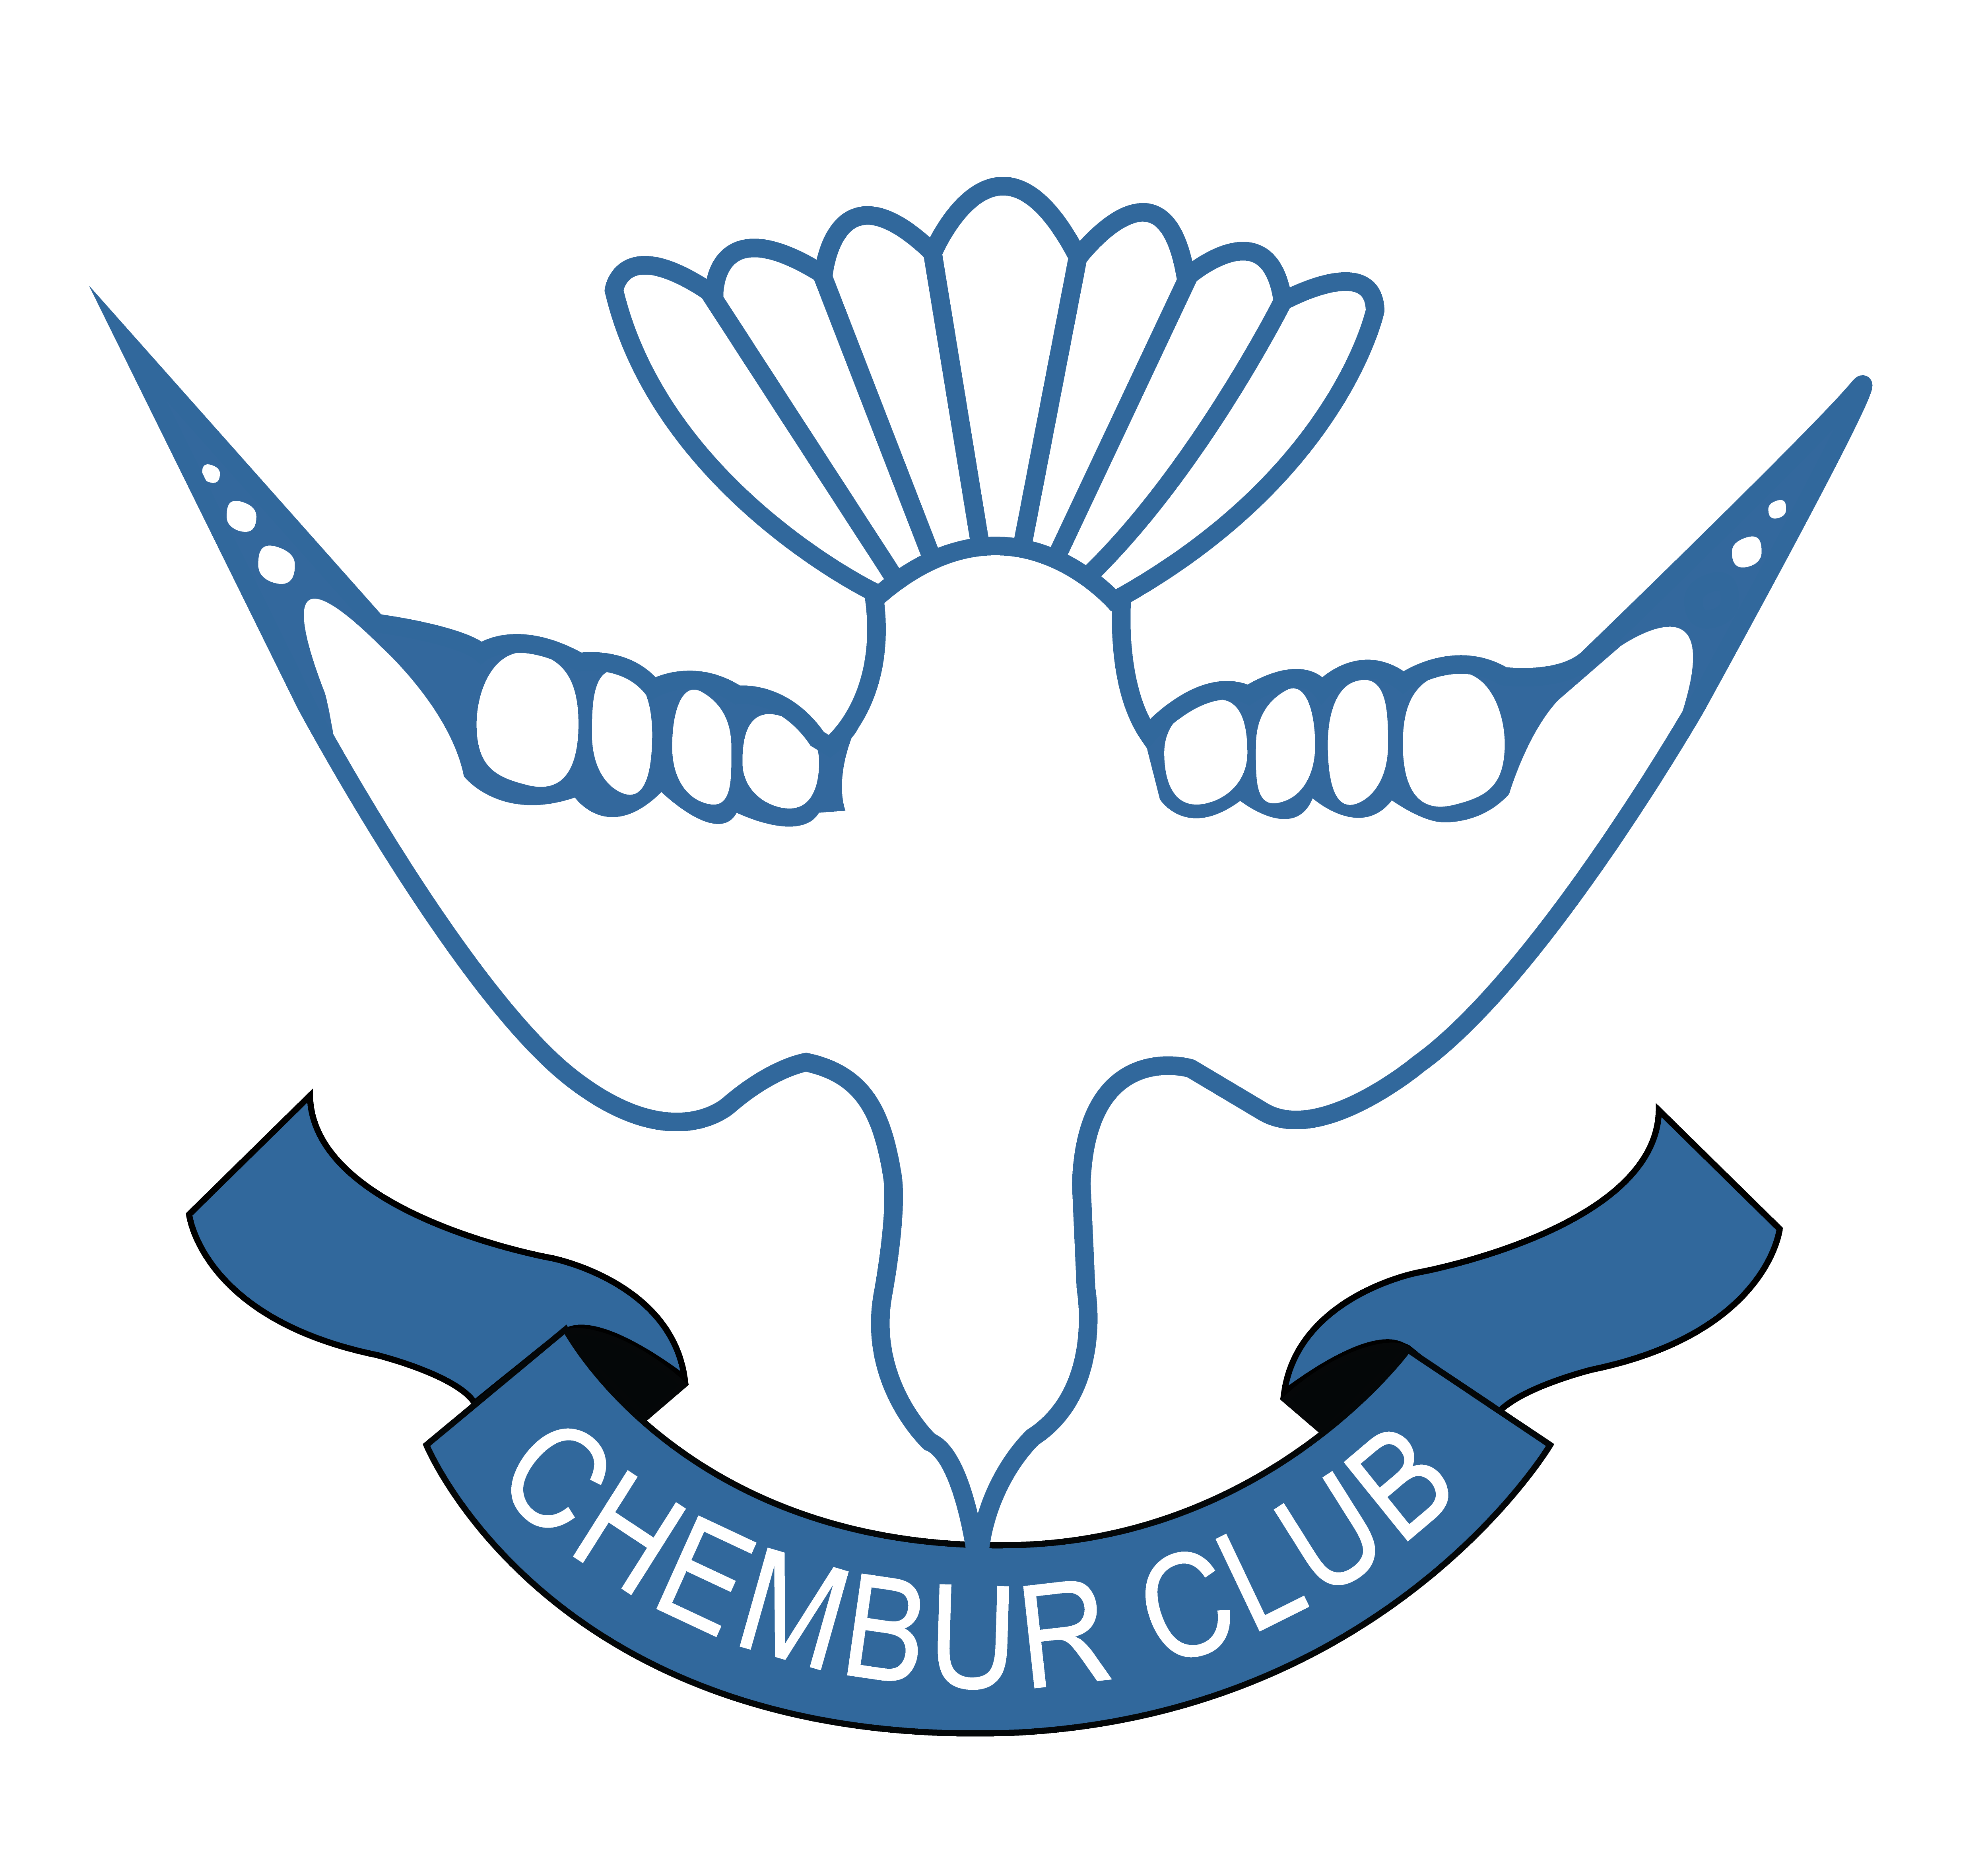 Chembur Club